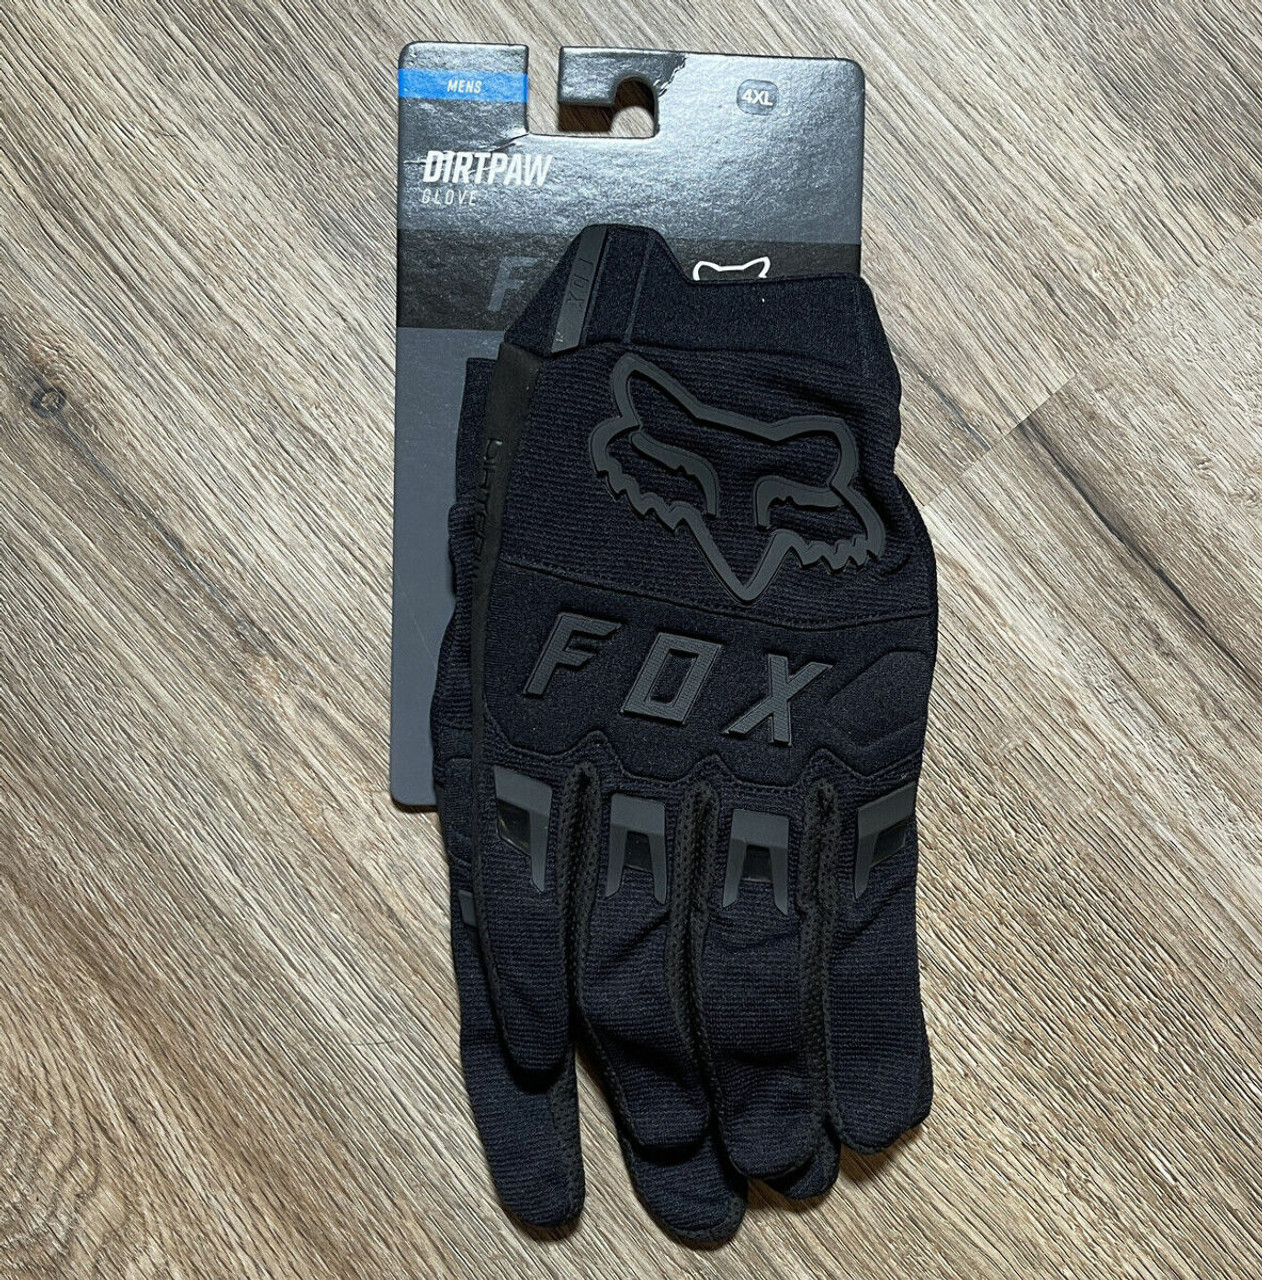 New Fox Racing Dirtpaw Gloves - Black/Black - 4XLarge - 25796-021-4X